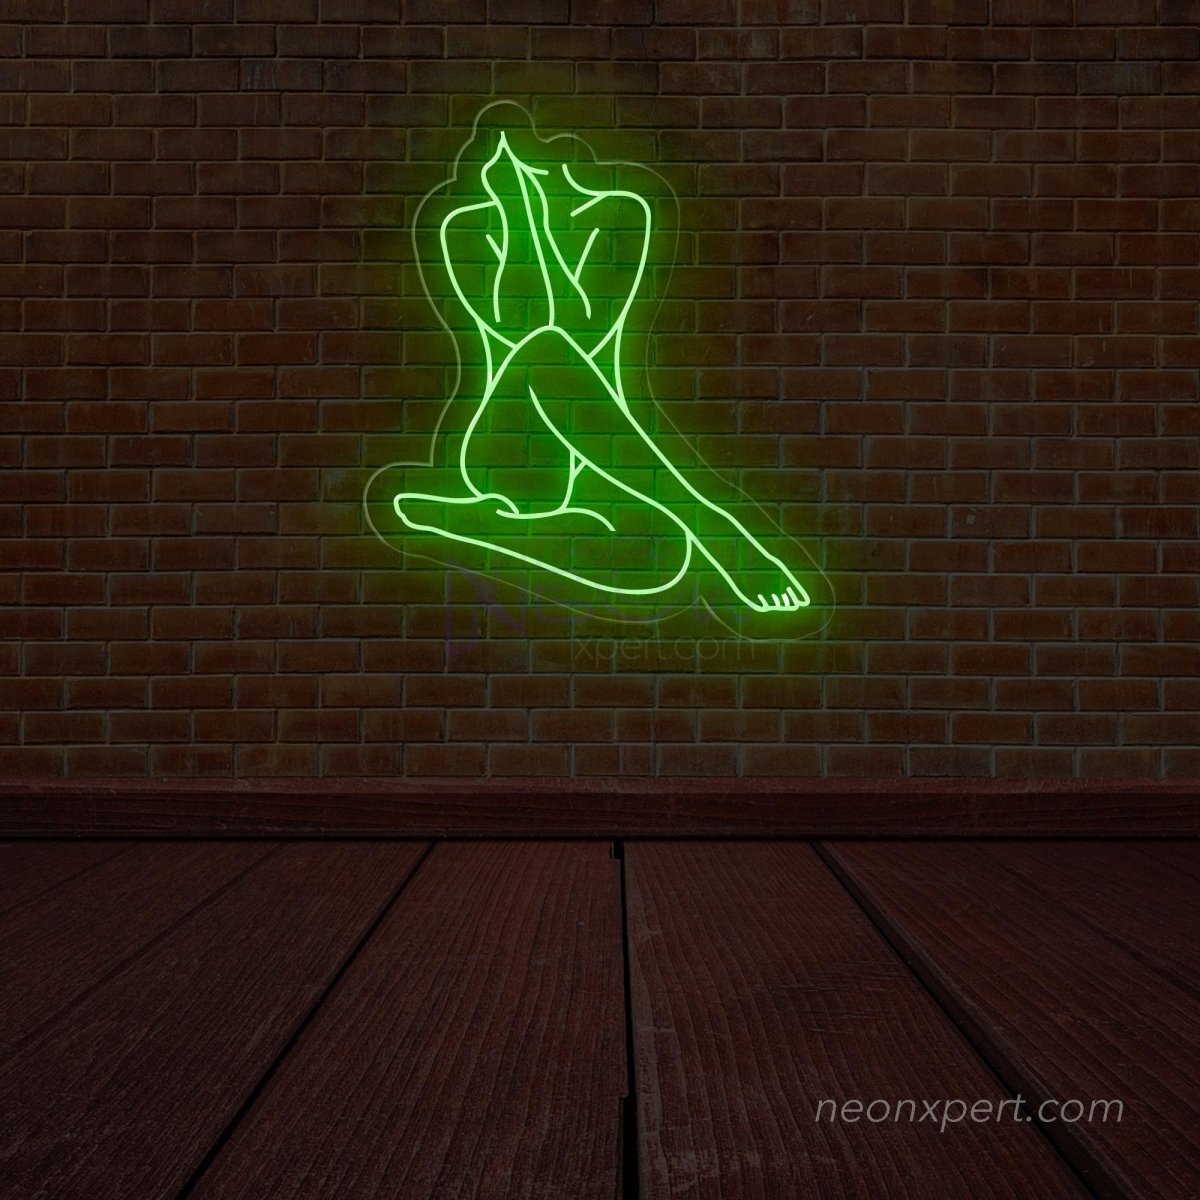 Female Body Silhouette Neon Sign - NeonXpert